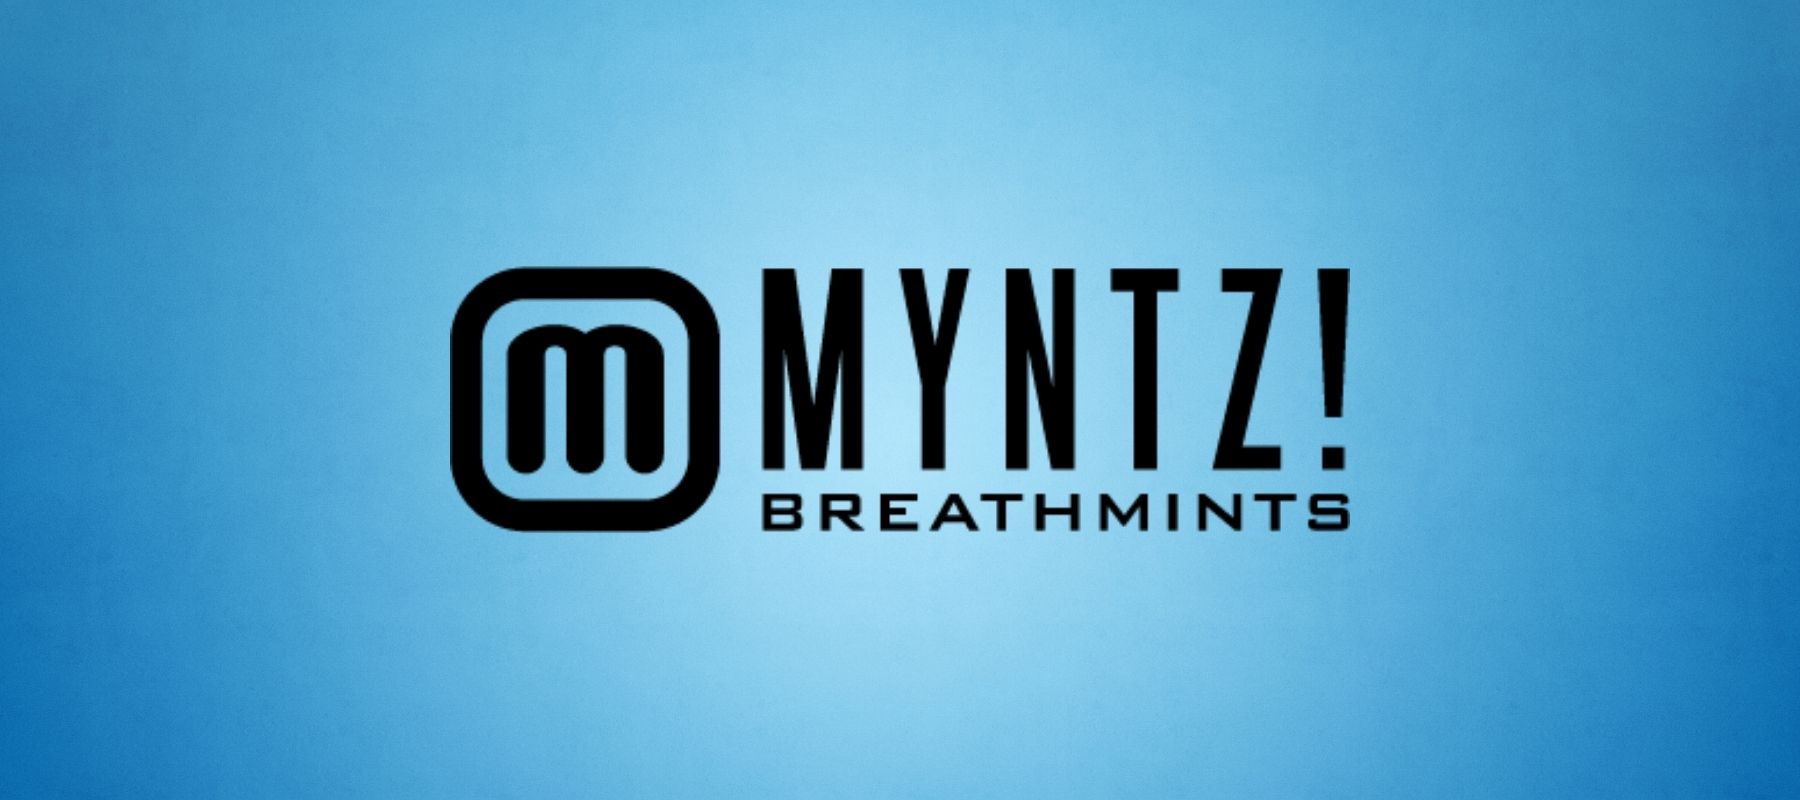 Myntz! Breathmints Maiden Blog Post Graphic